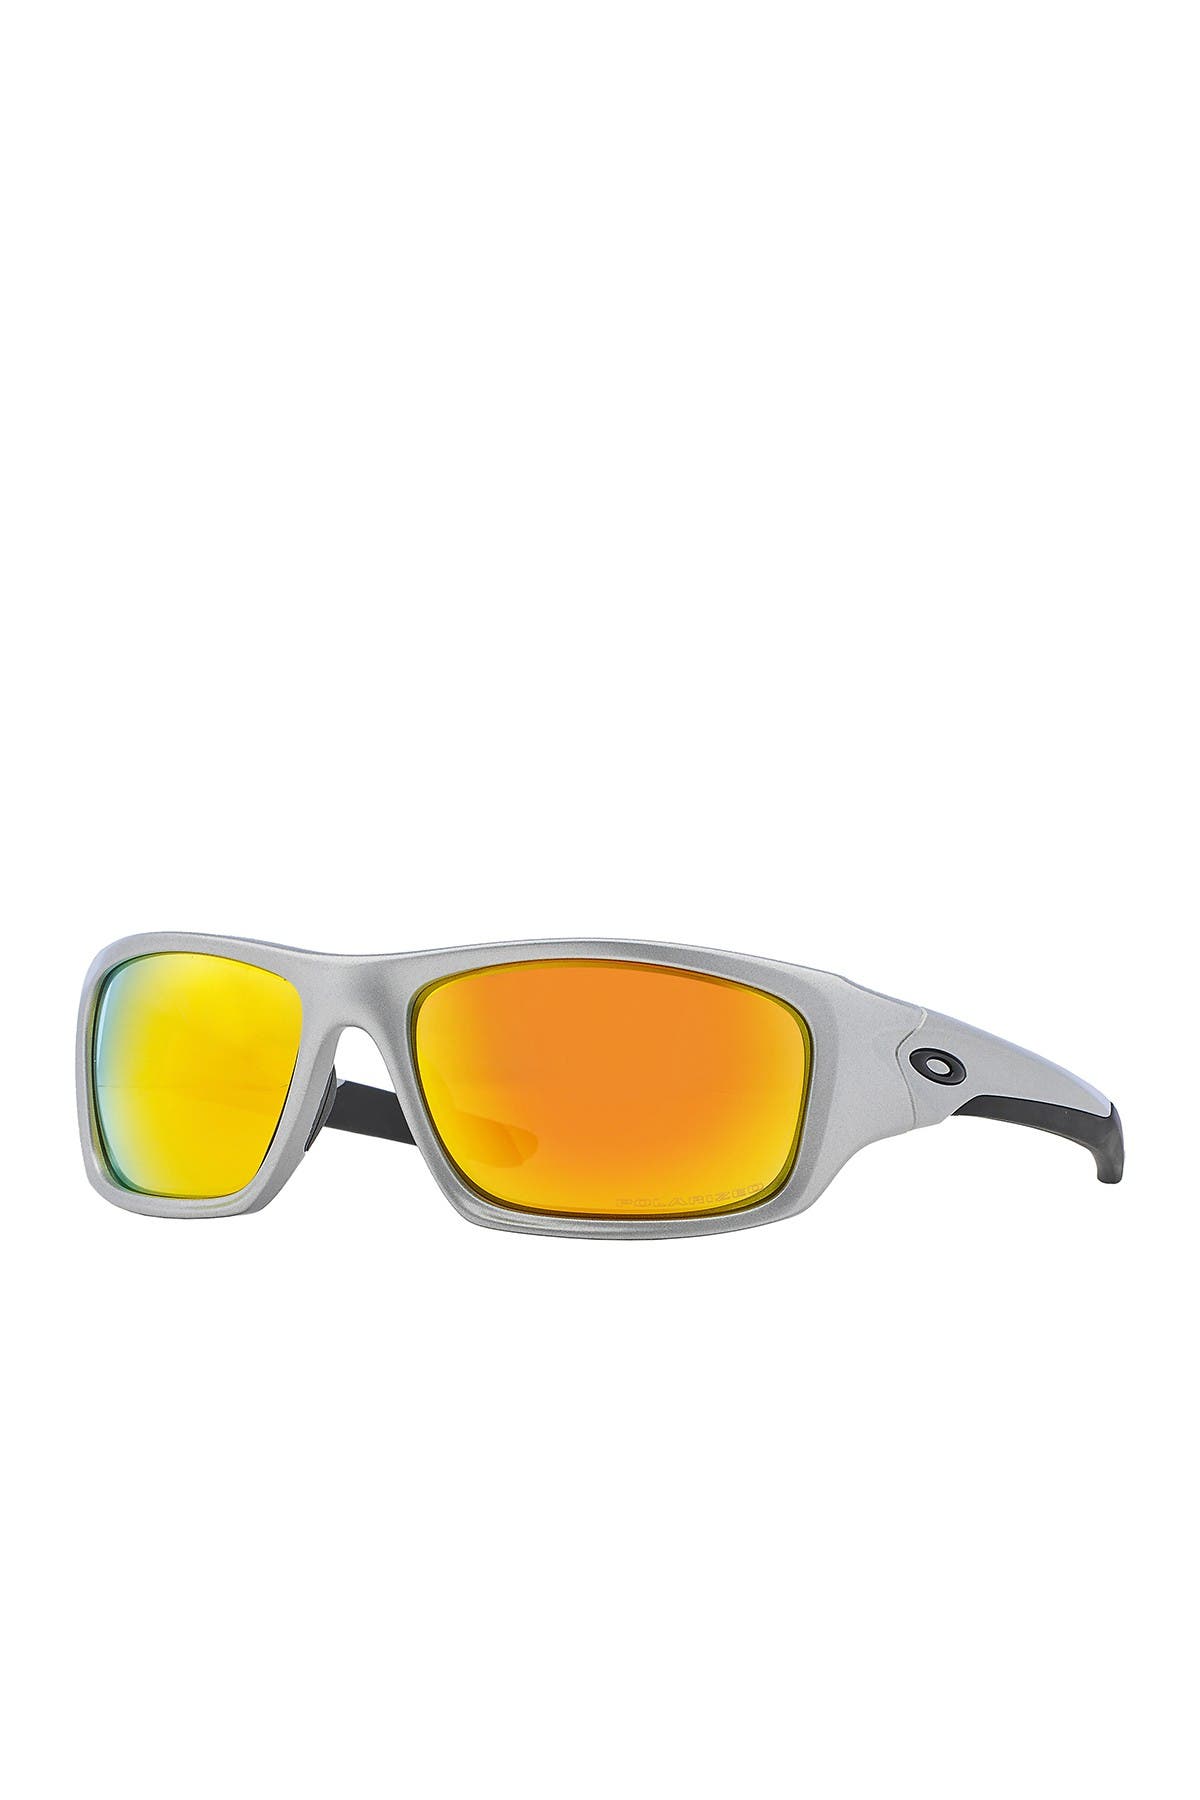 oakley valve polarized sunglasses